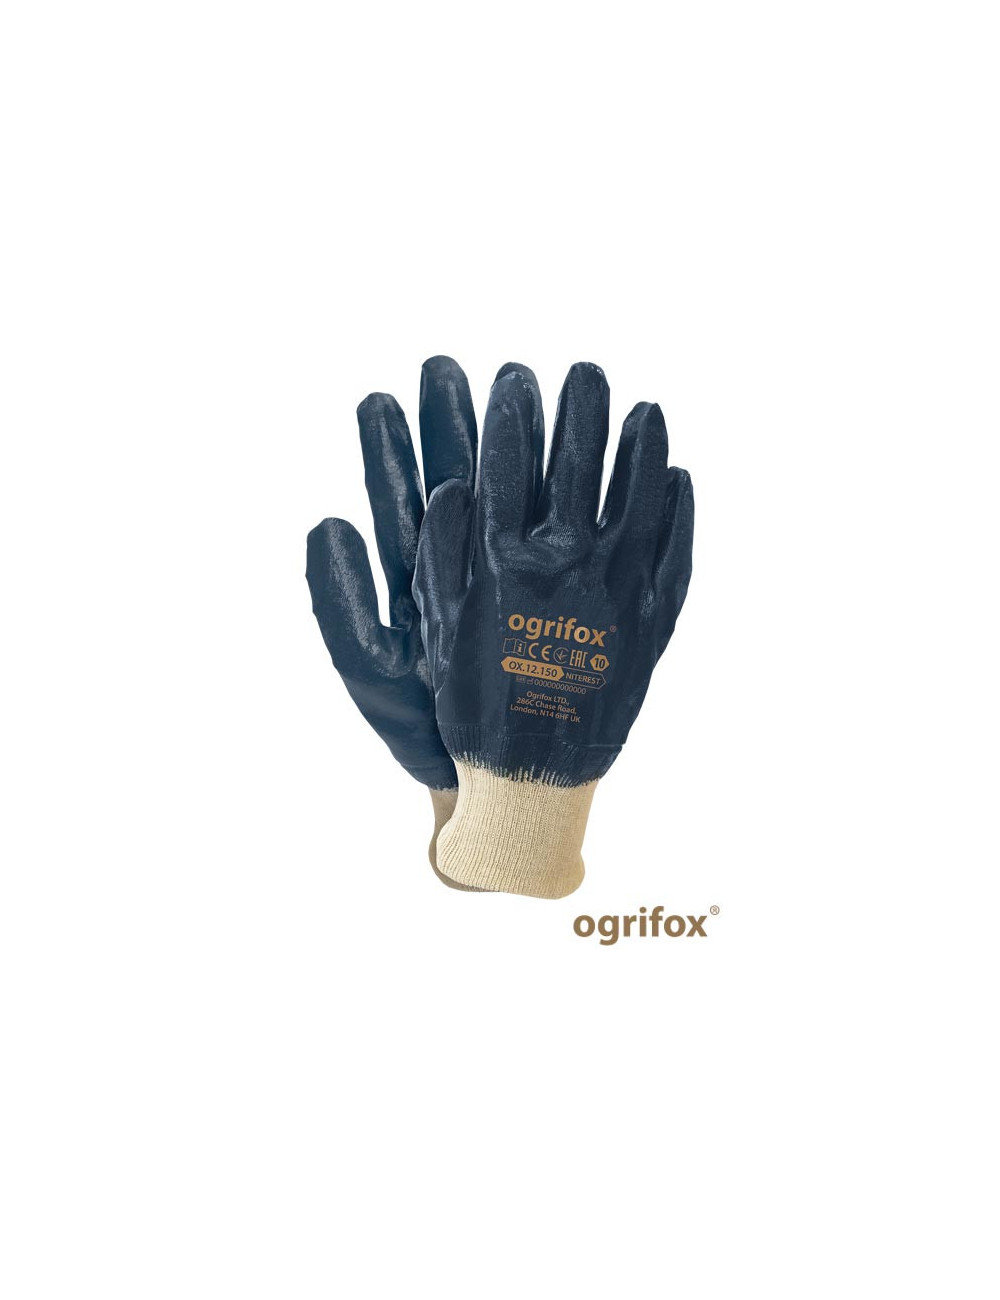 Gloves ox.12.150 niterest ox-niterest beg beige-navy Ogrifox